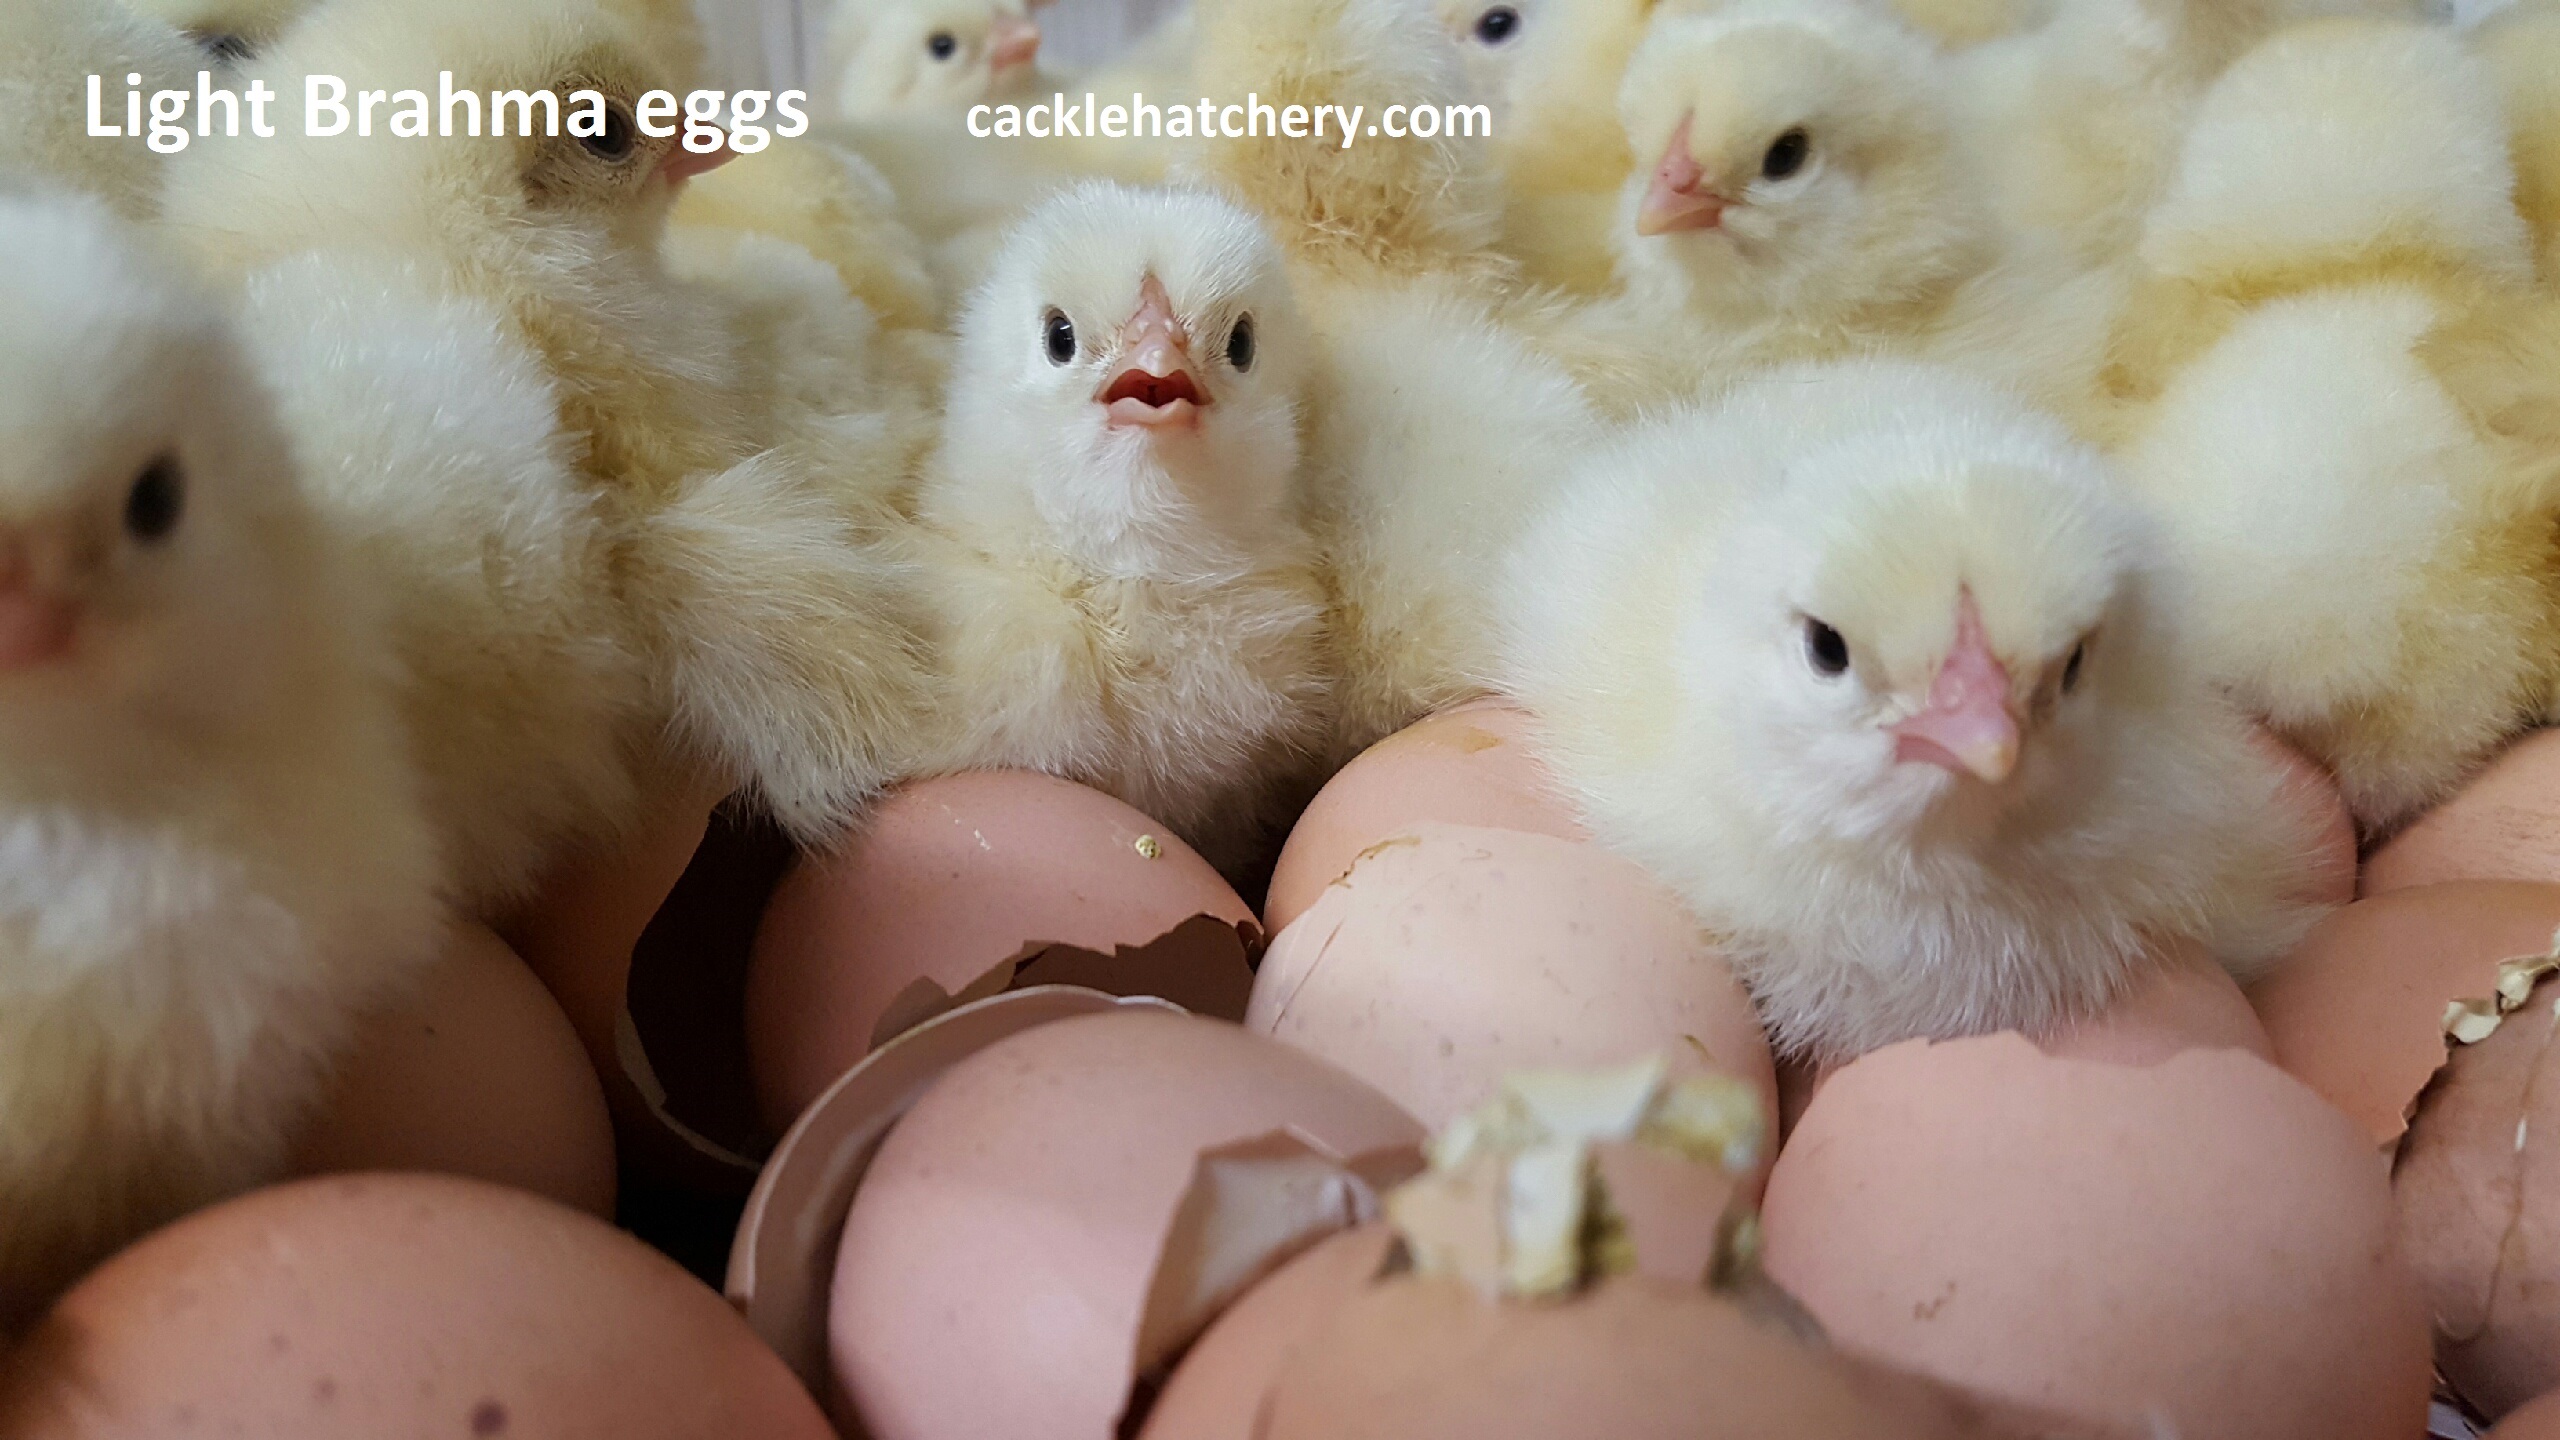 Brahma hatching eggs - farm & garden - by owner - sale - craigslist